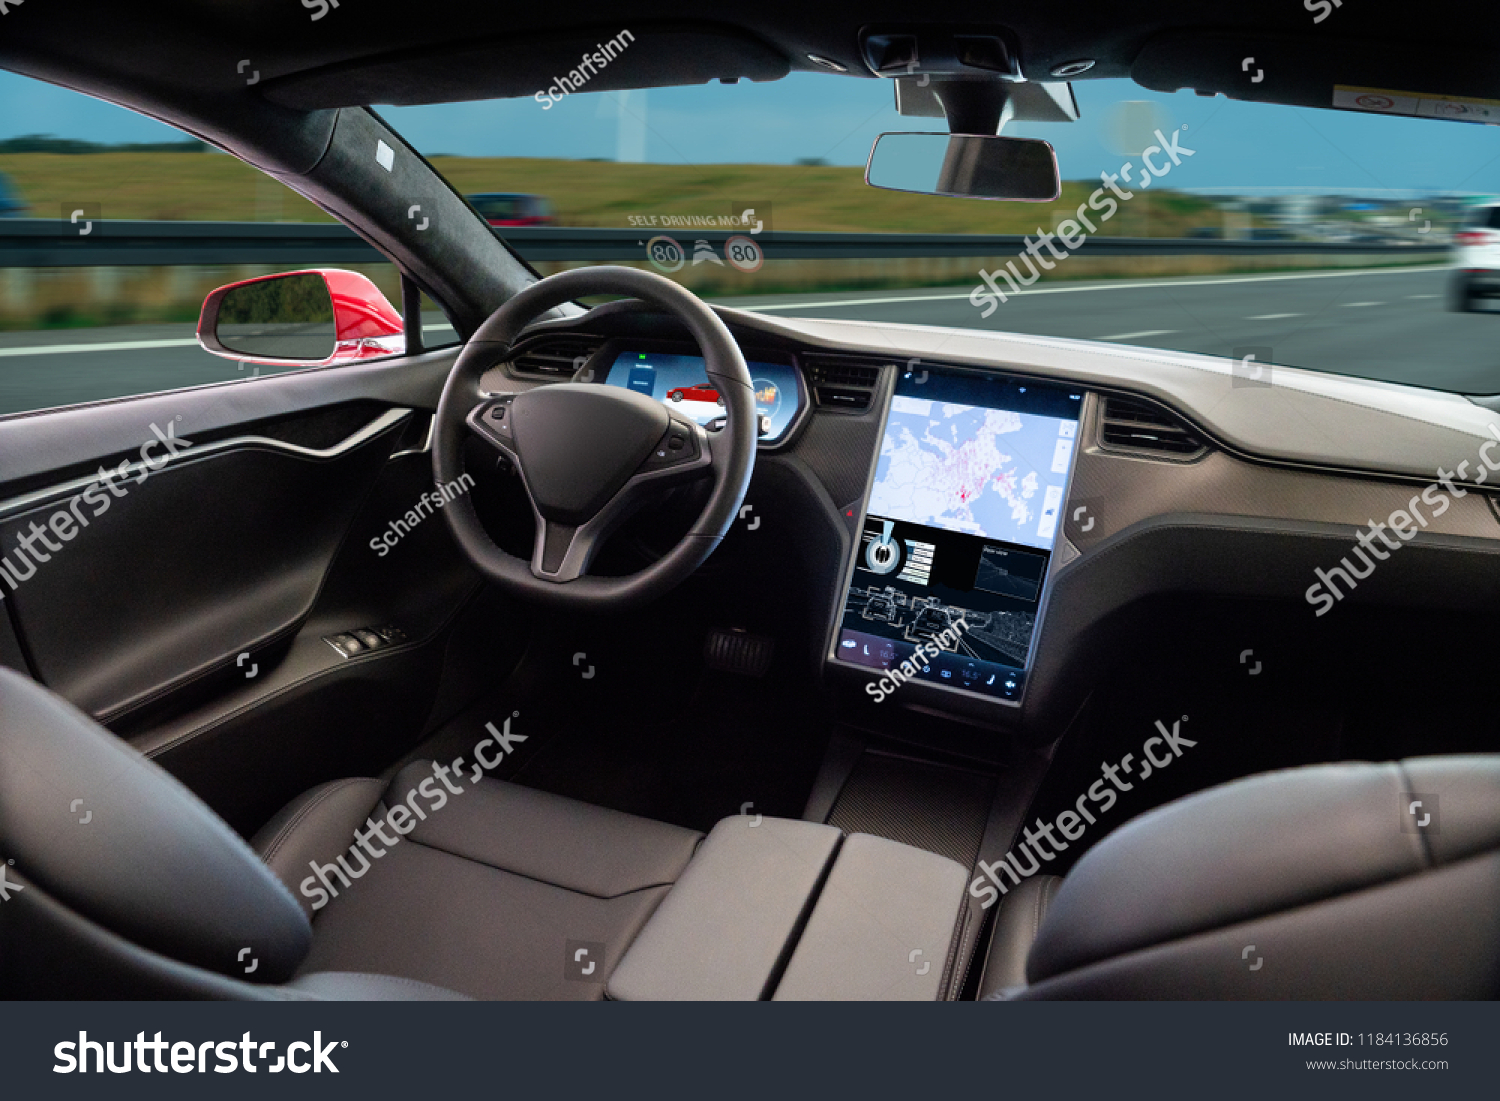 Self driving car on a road. Autonomous vehicle. Inside view. #1184136856